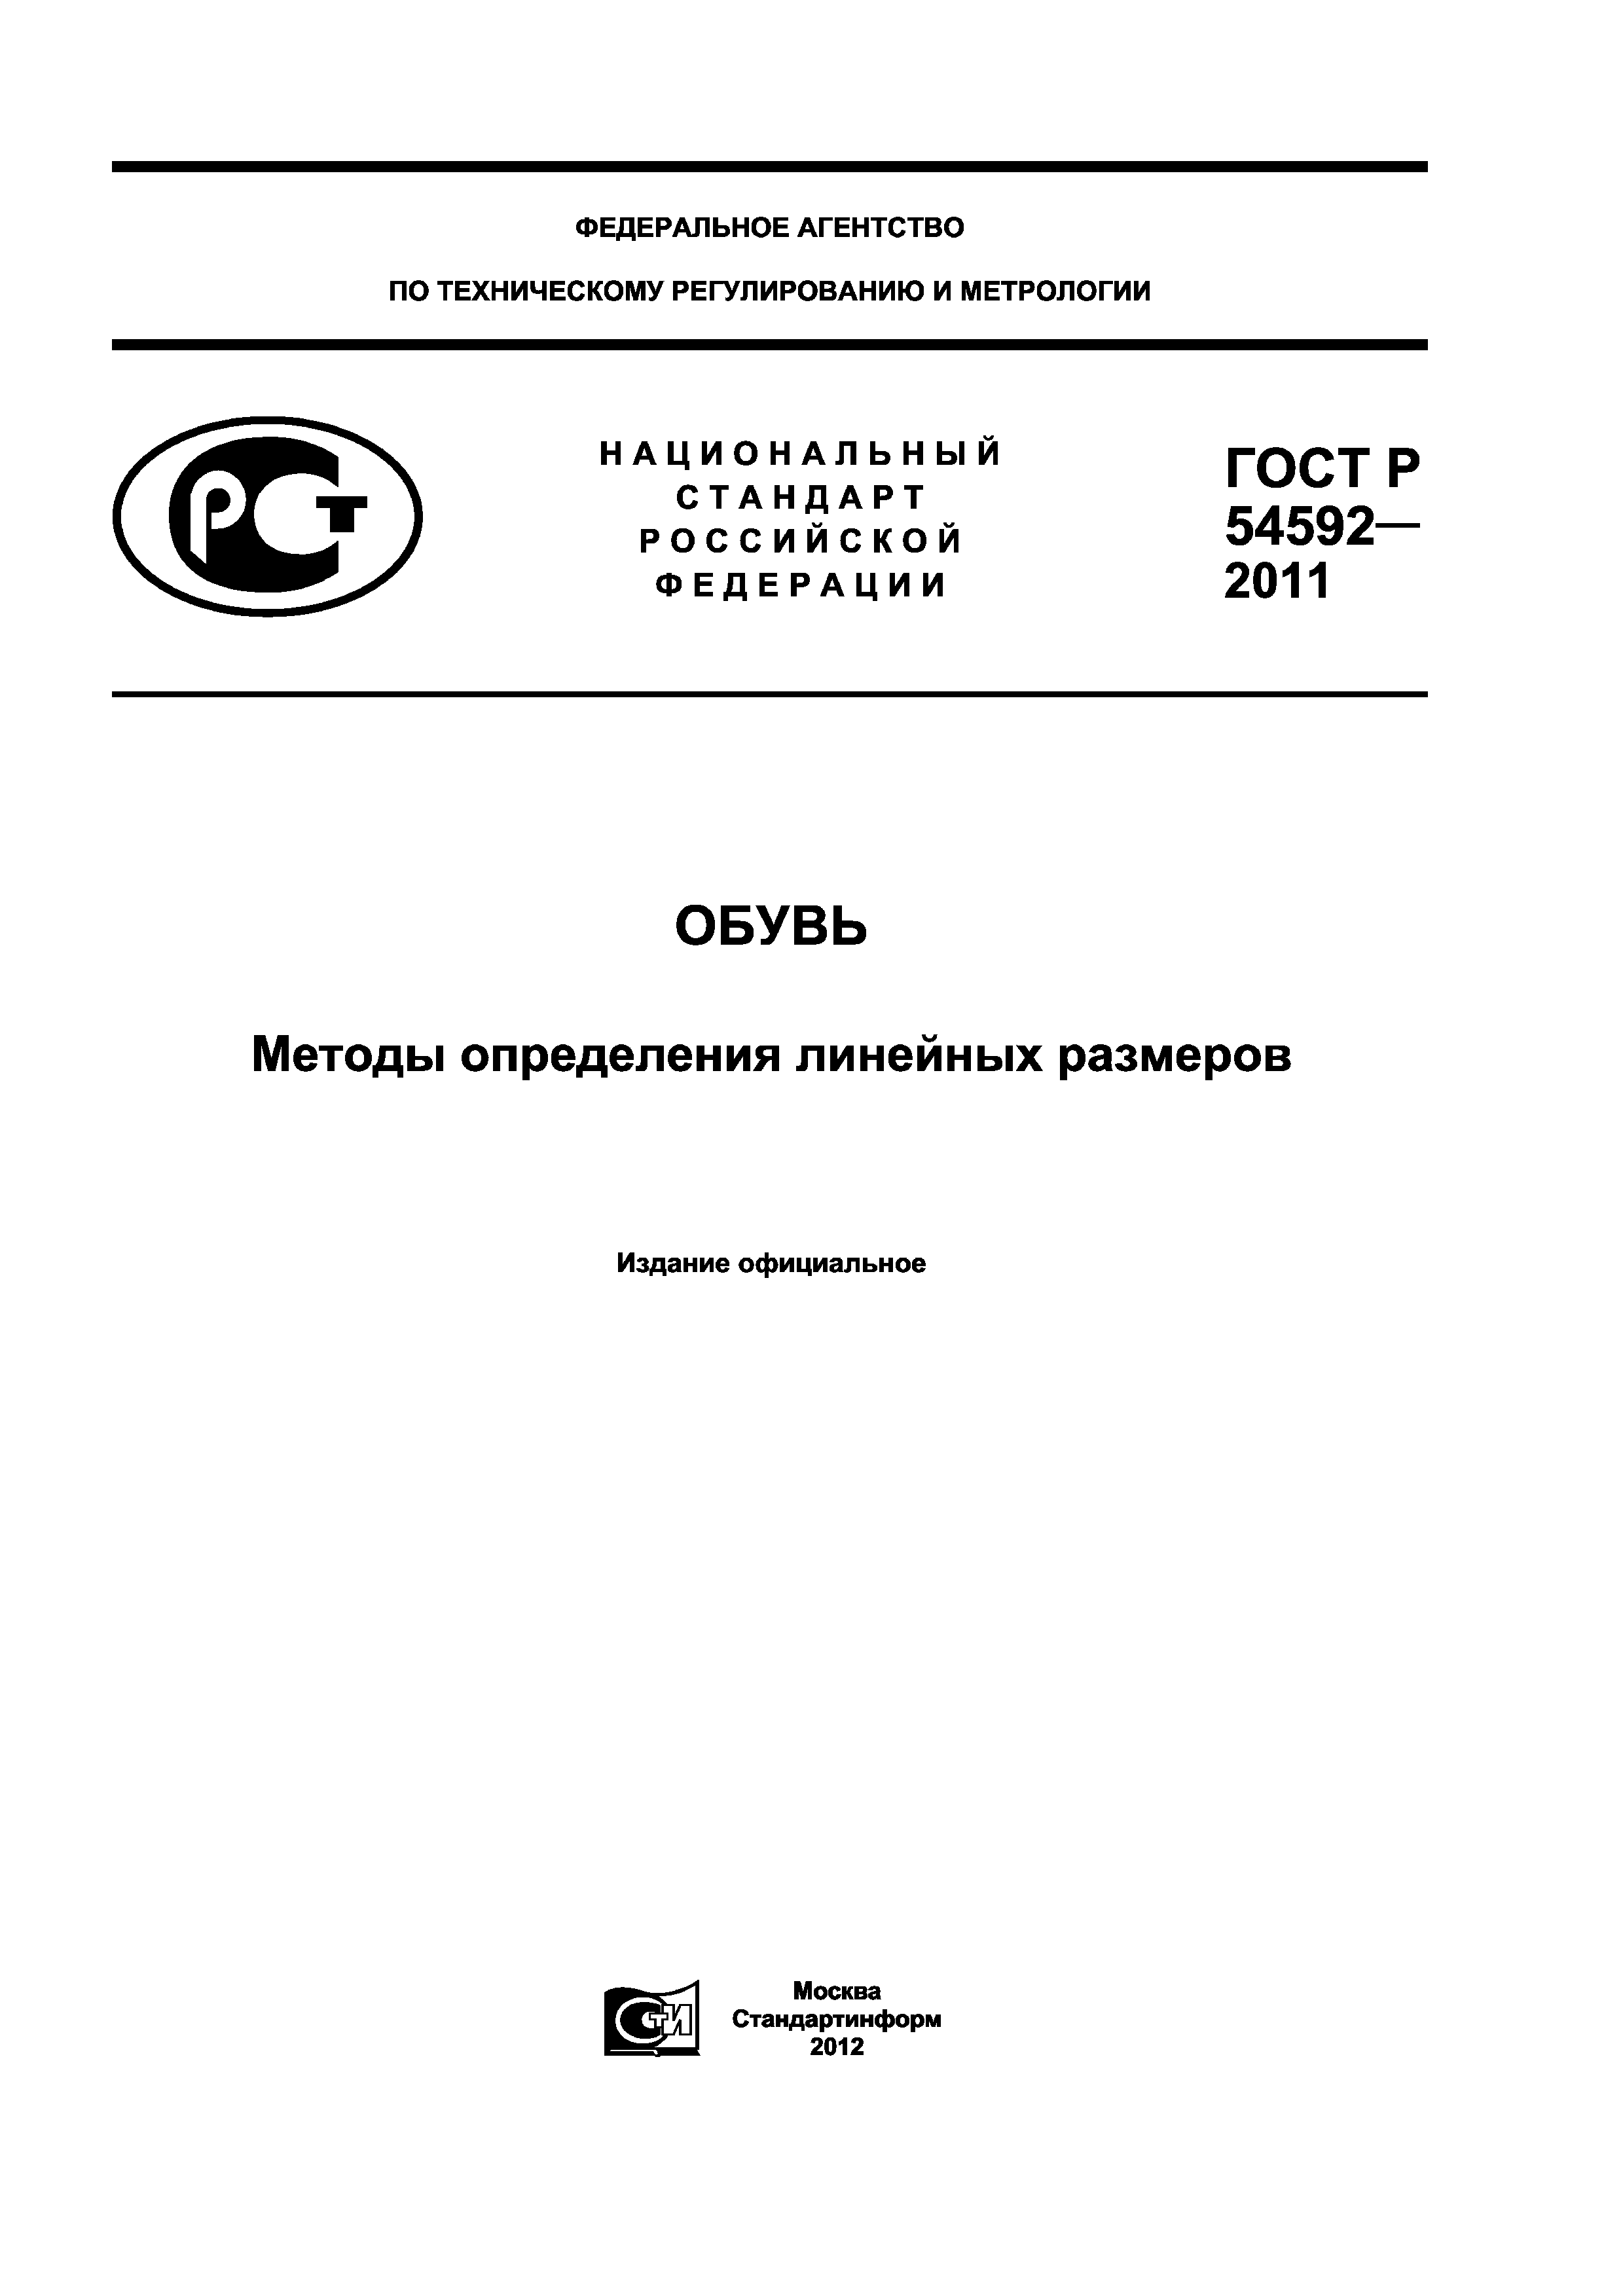 ГОСТ Р 54592-2011